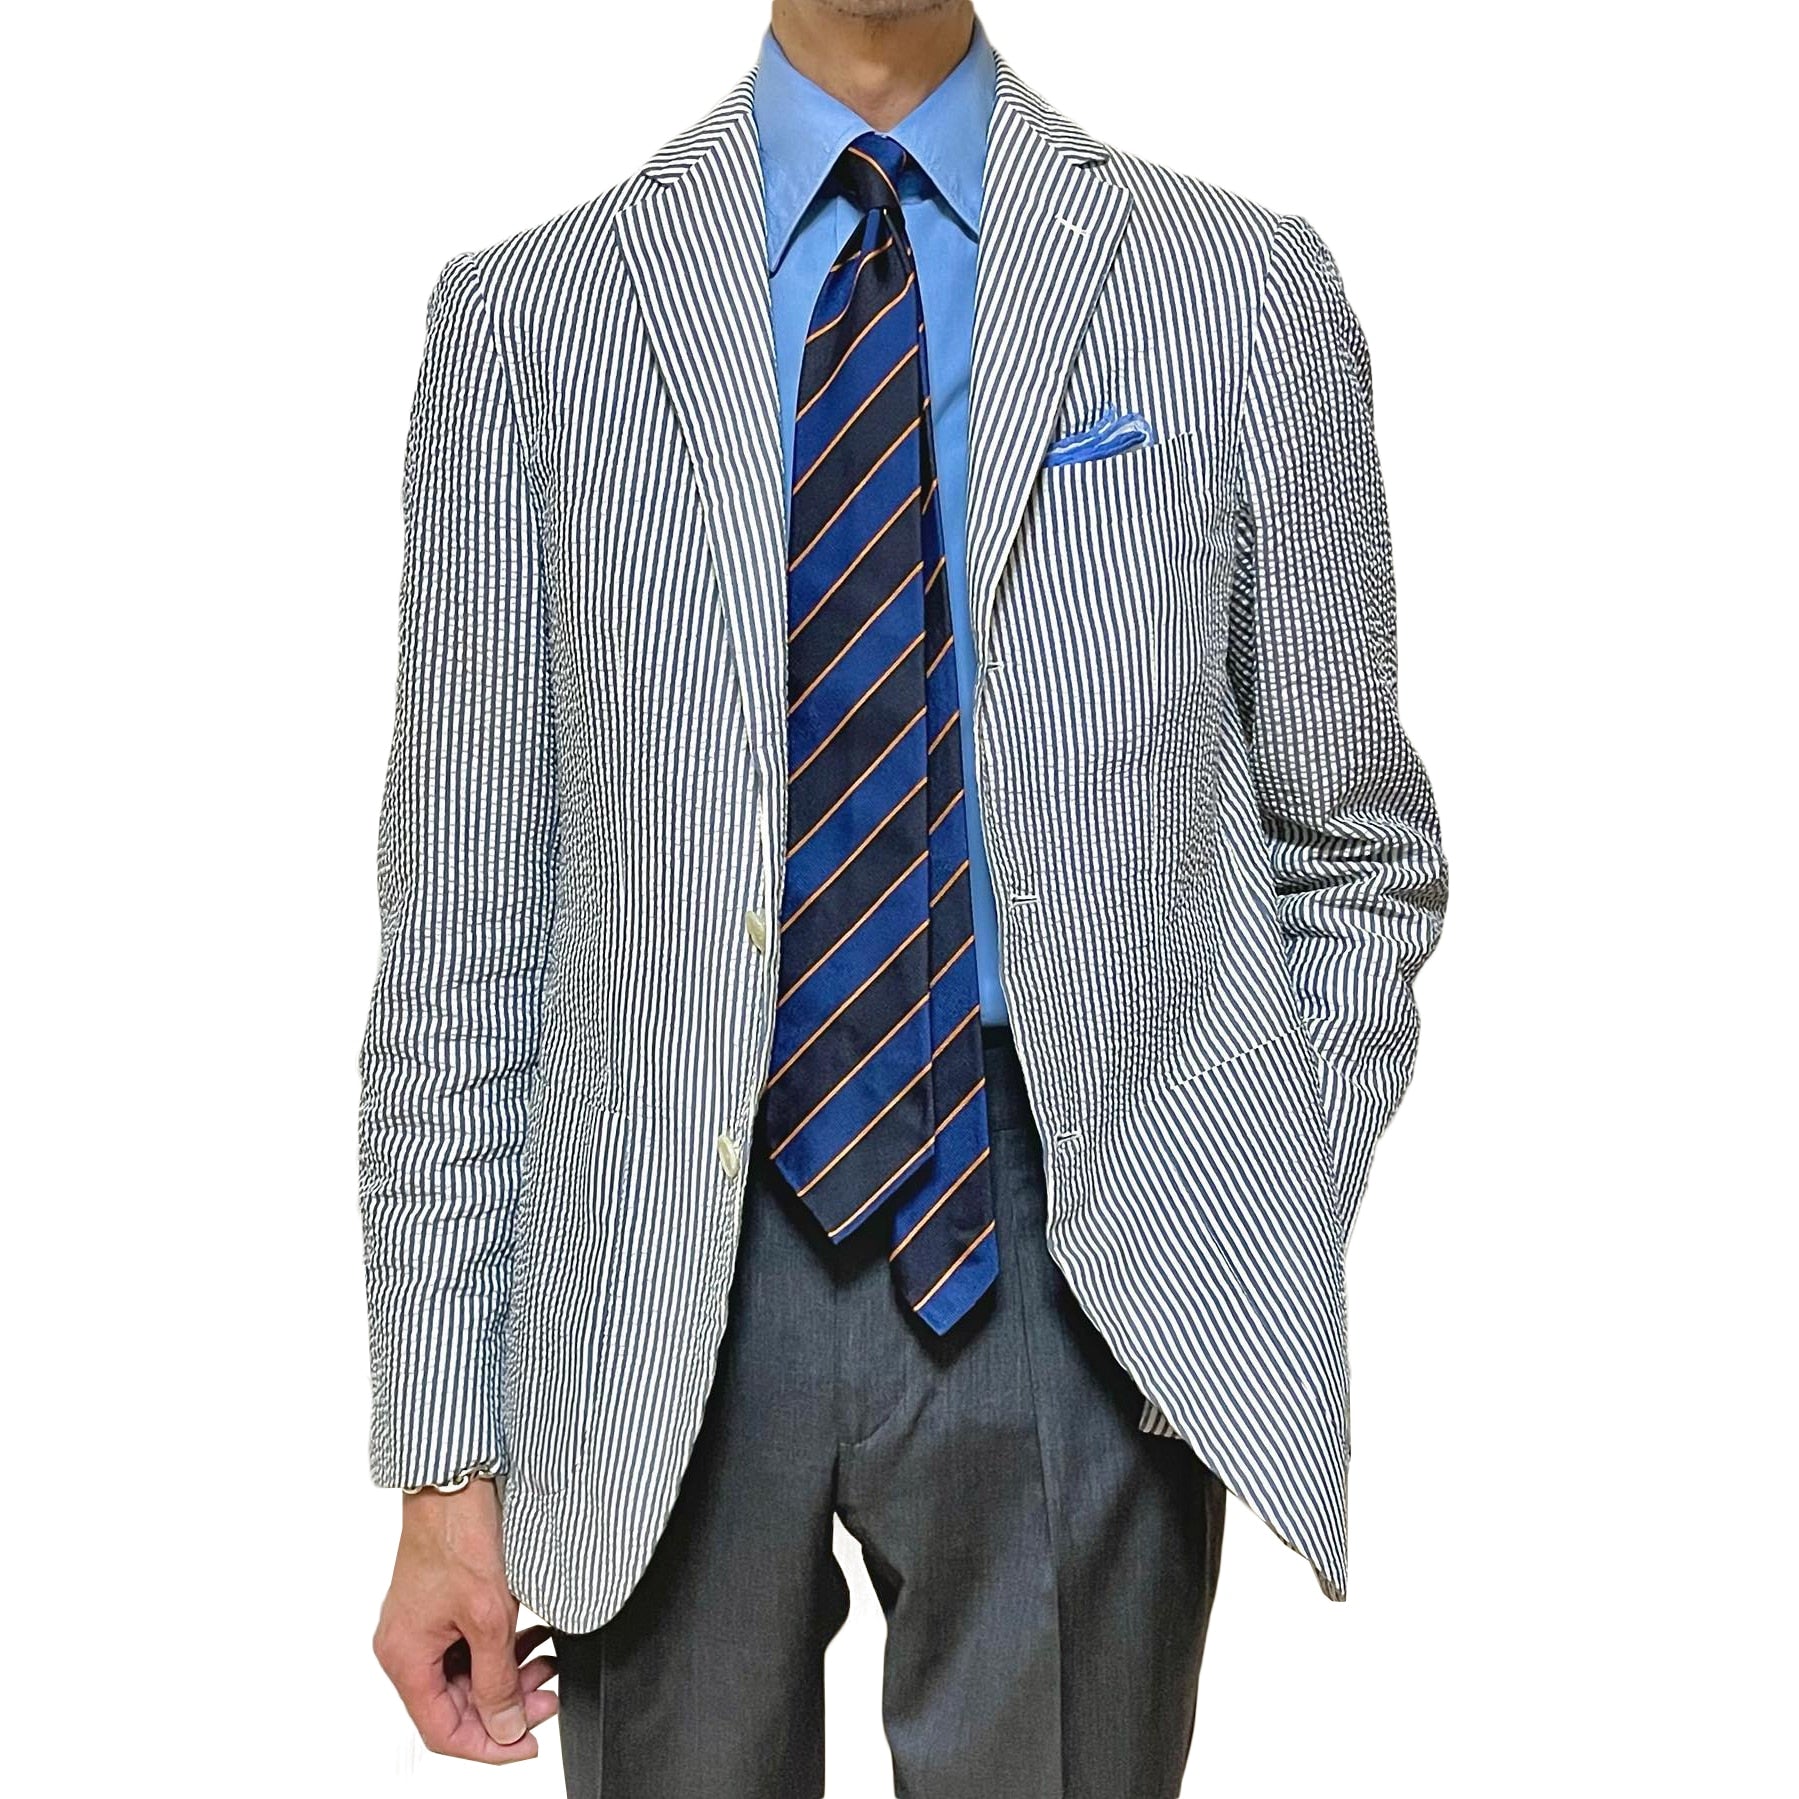 Men's Suit 2 Pieces Blazer Pants Single Breasted Peaked Lapel StripesFormal Business Slim Fit Formal Wedding Groom Costume Homme